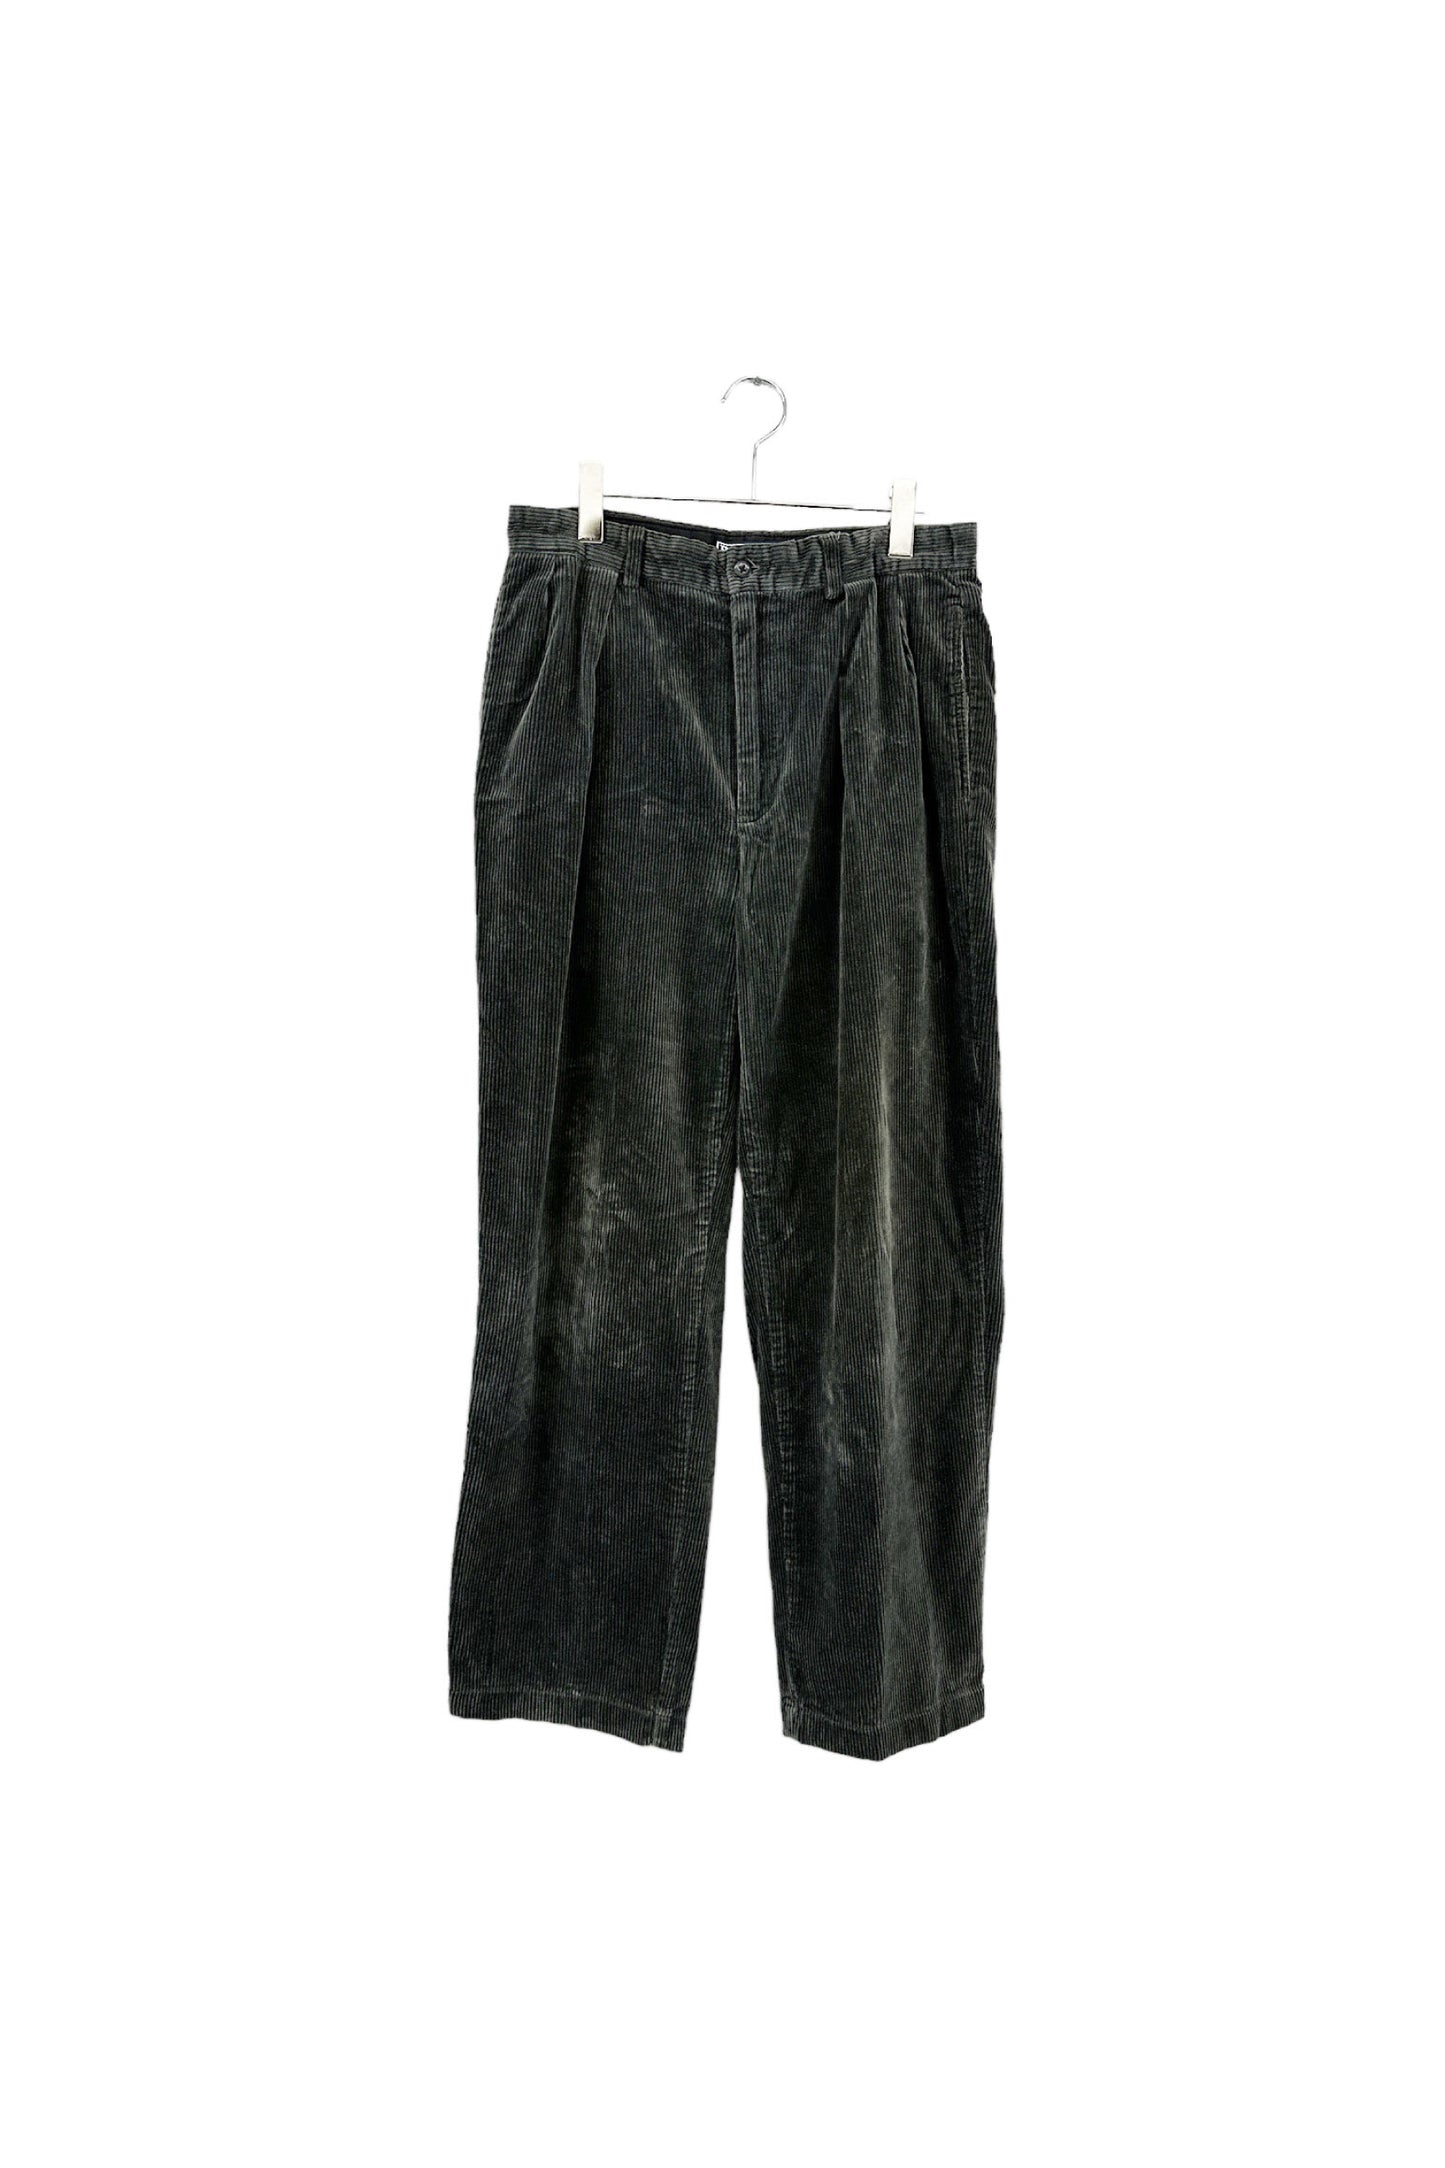 90's Polo by Ralph Lauren black corduroy pants